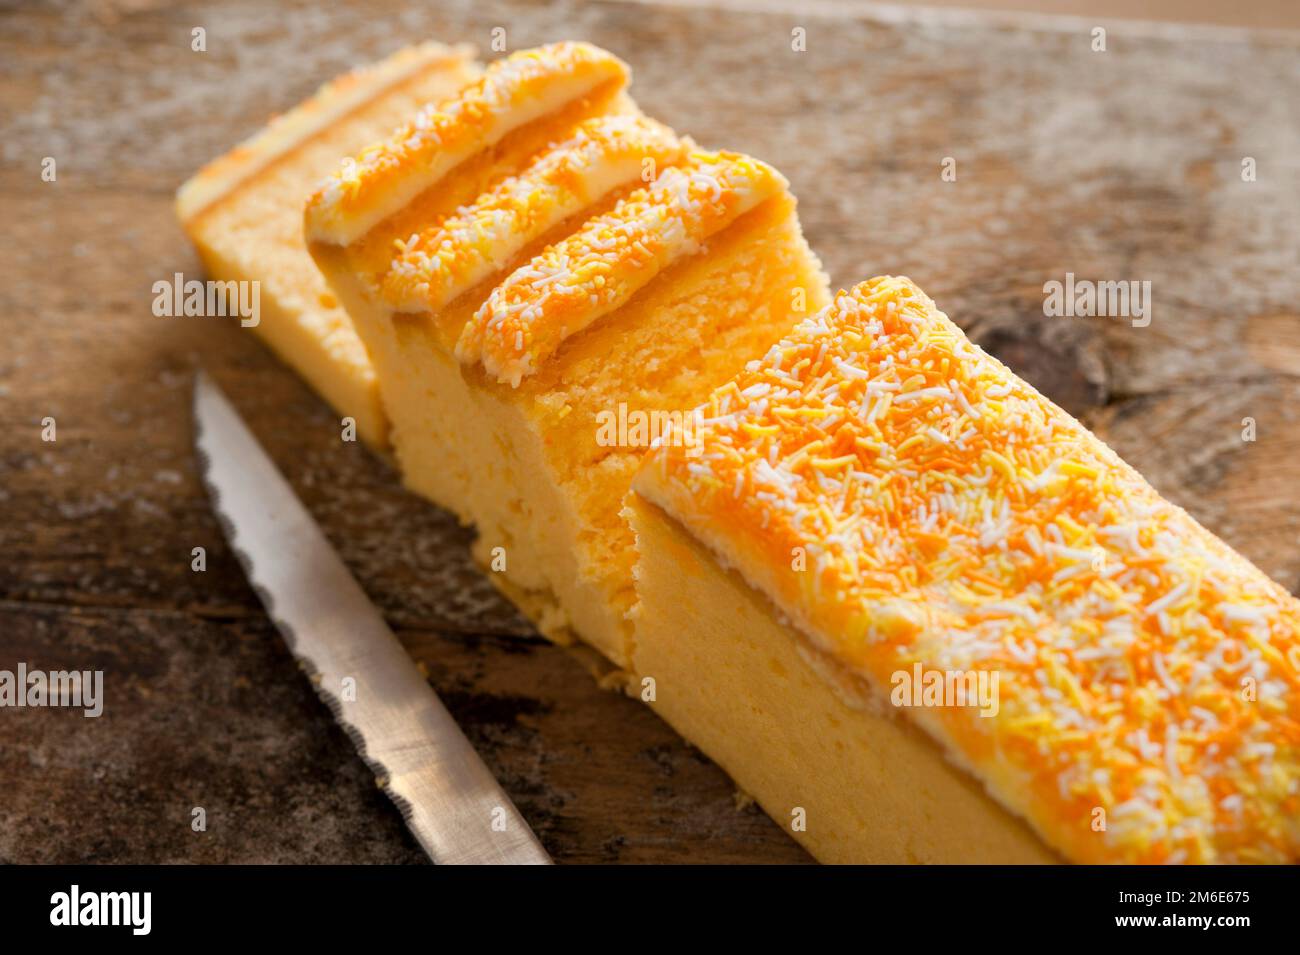 Sliced fresh vanilla sponge cake with icing Stock Photo